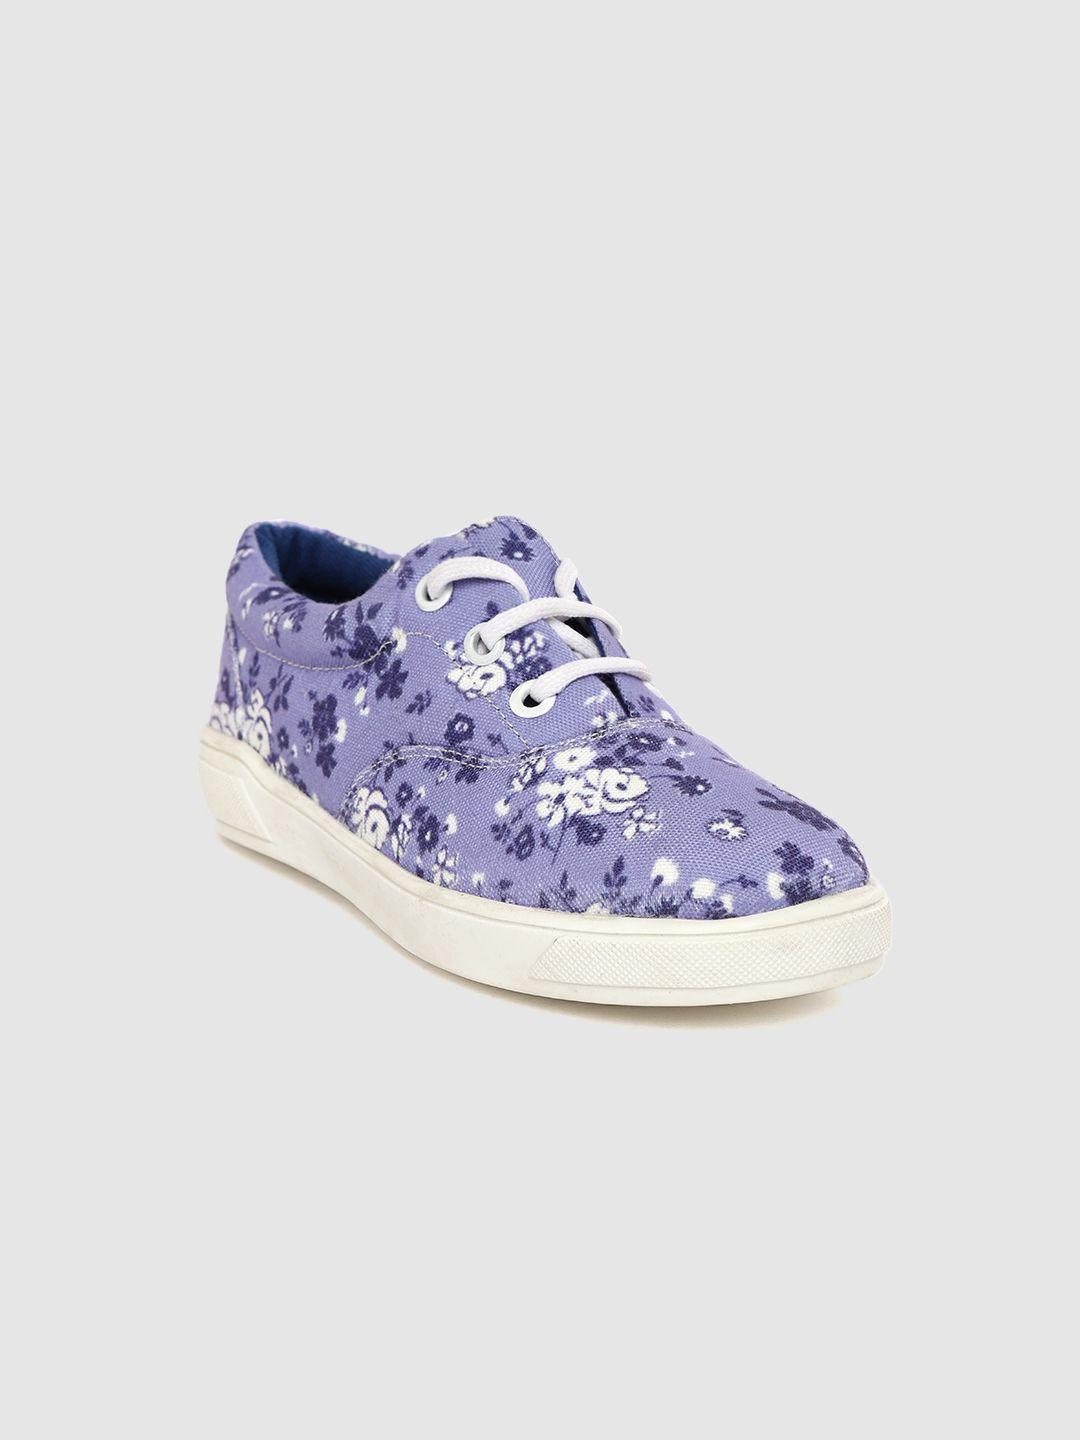 yk girls purple & white floral print sneakers